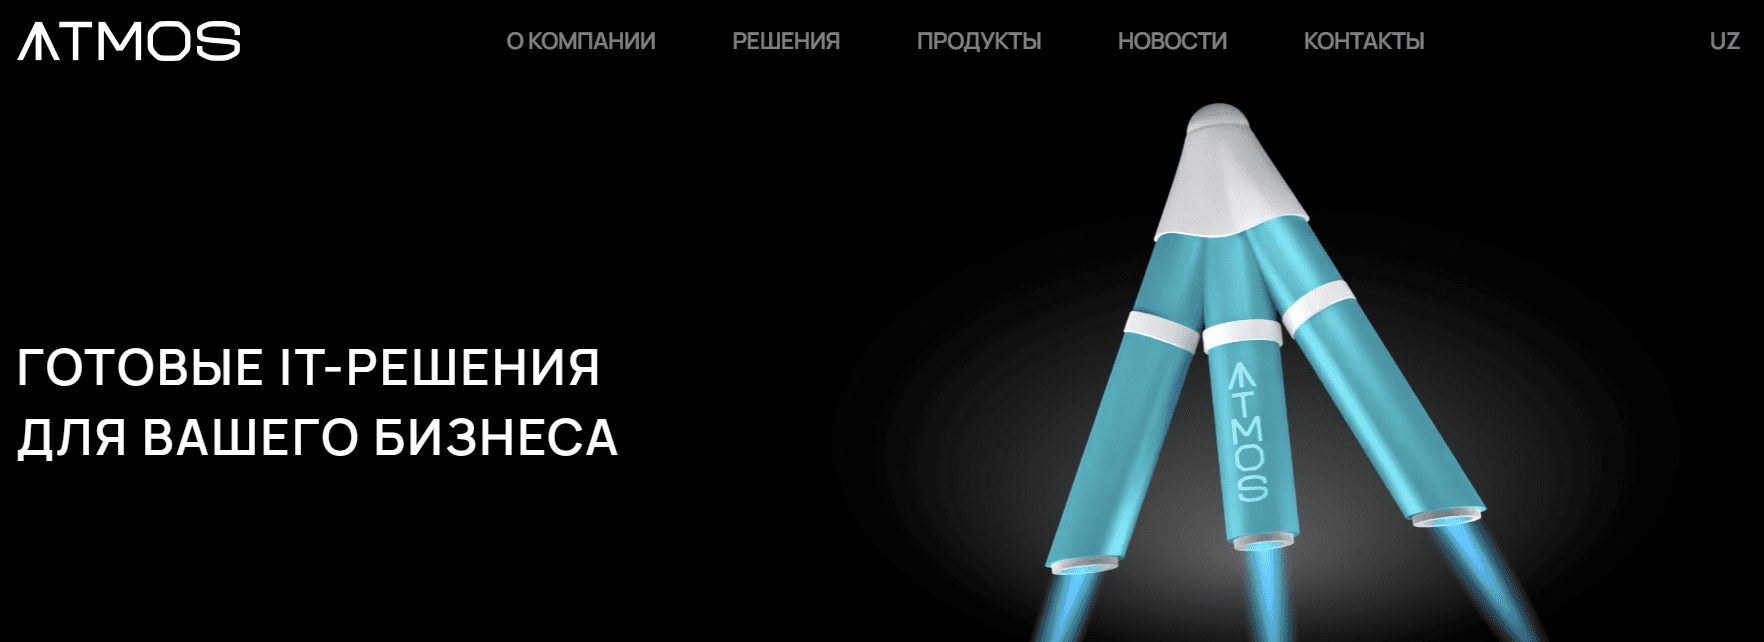 Paymo Uzbekistan (atmos.uz) – официальный сайт